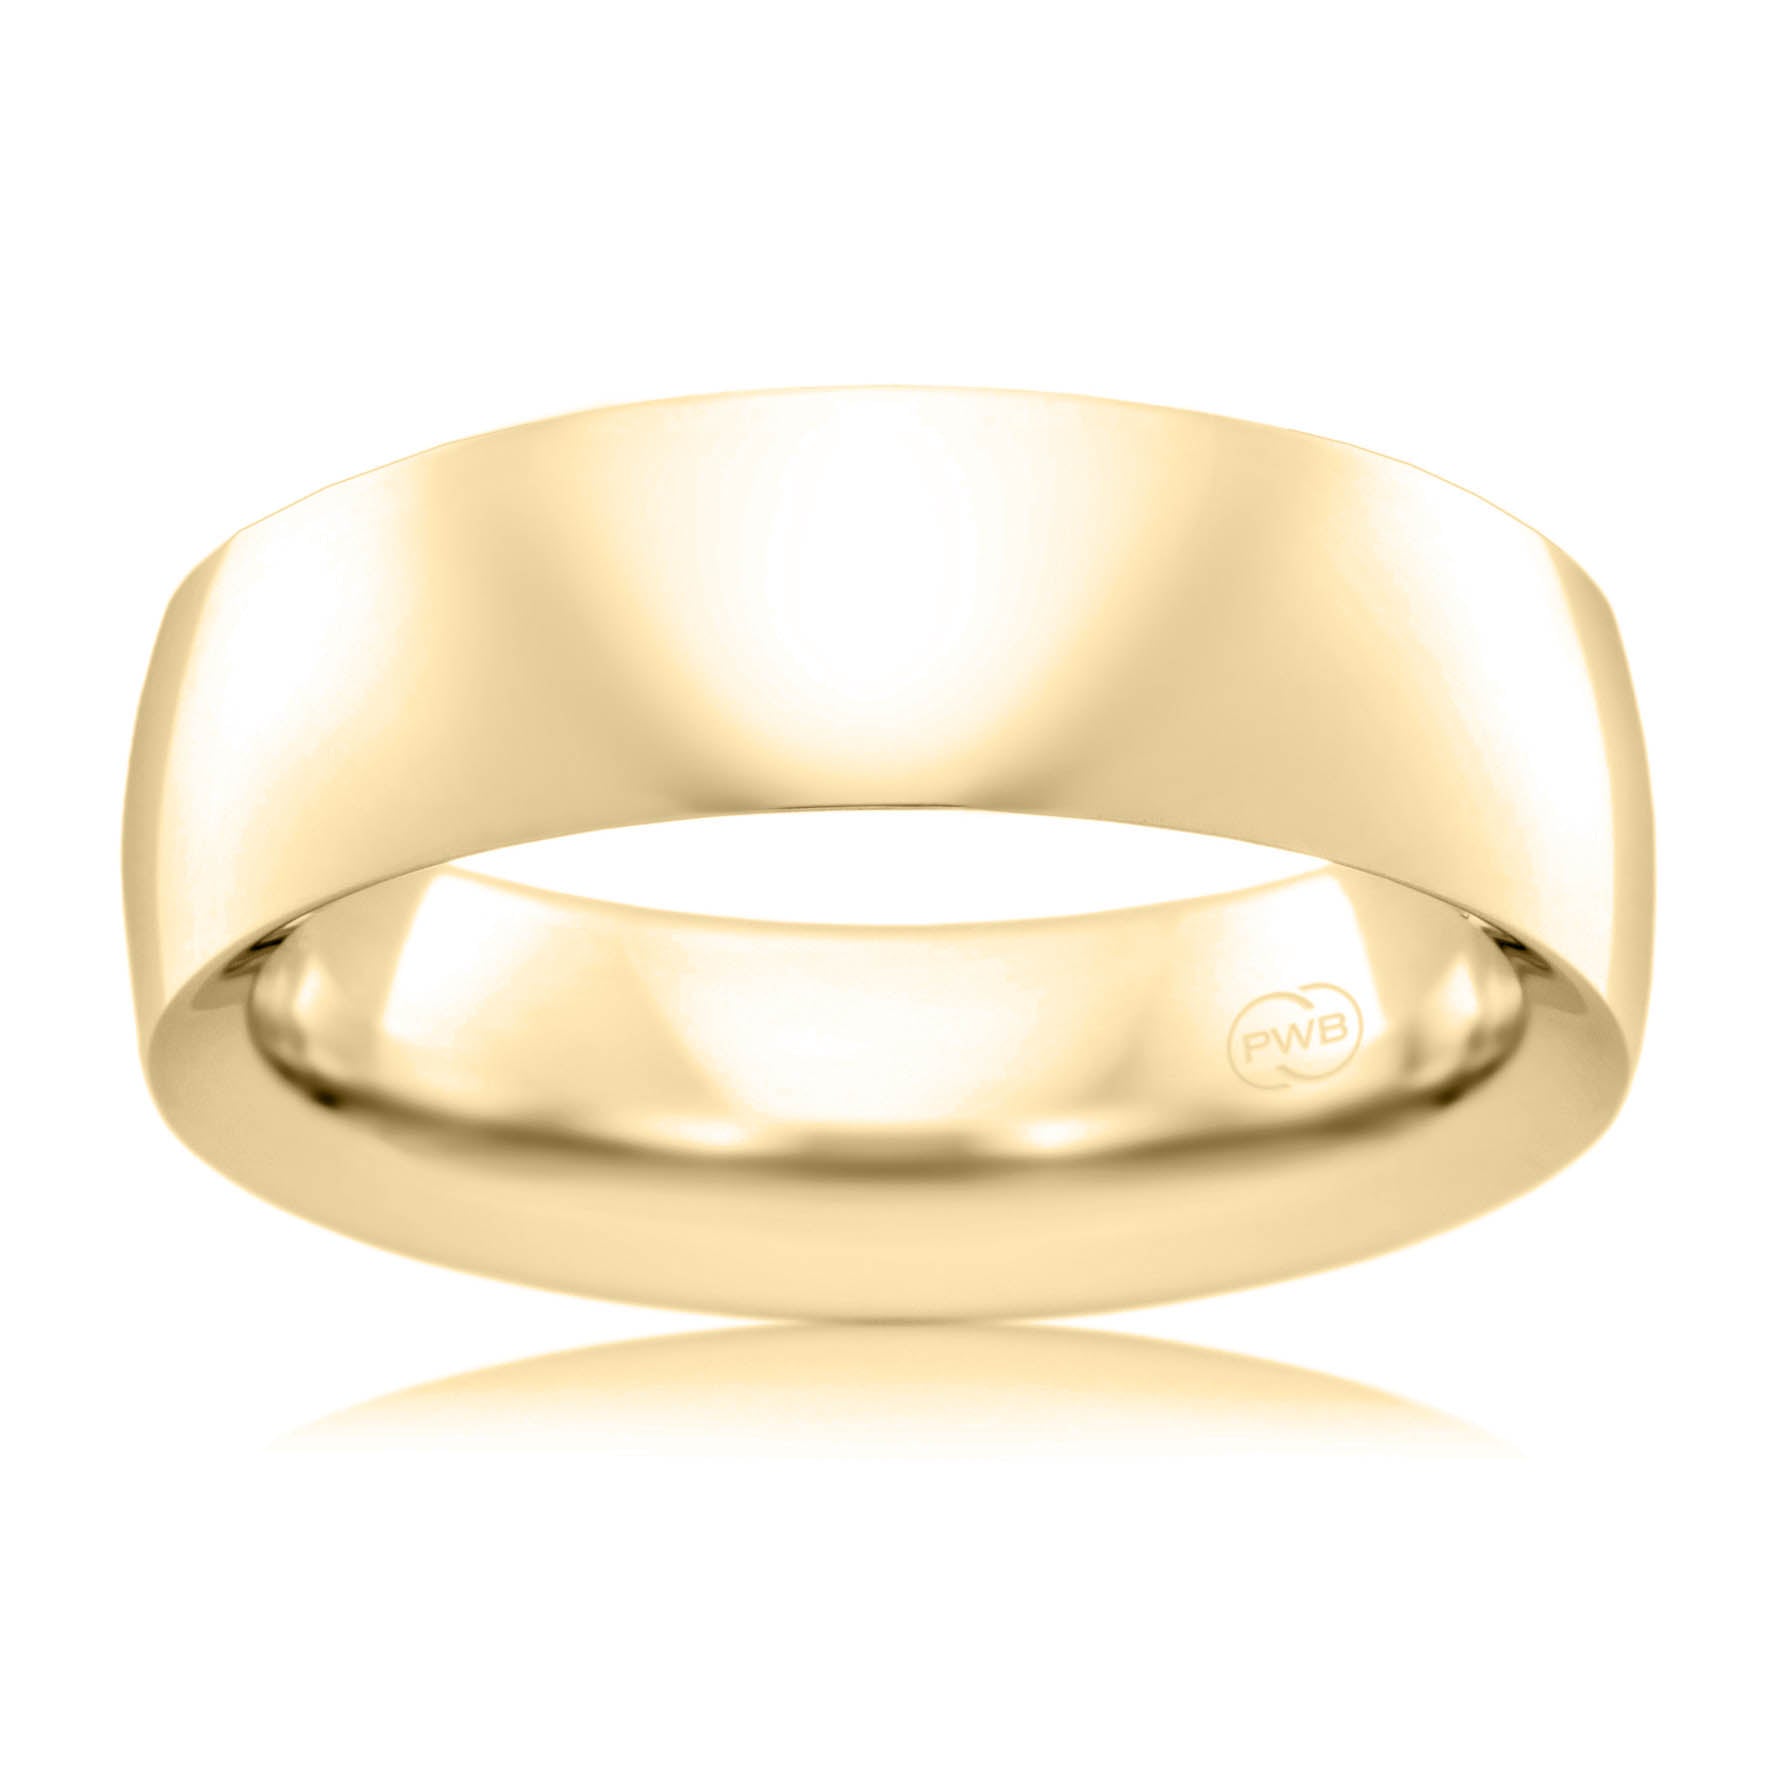 Gents Luxury "ORION" Wedding Ring.